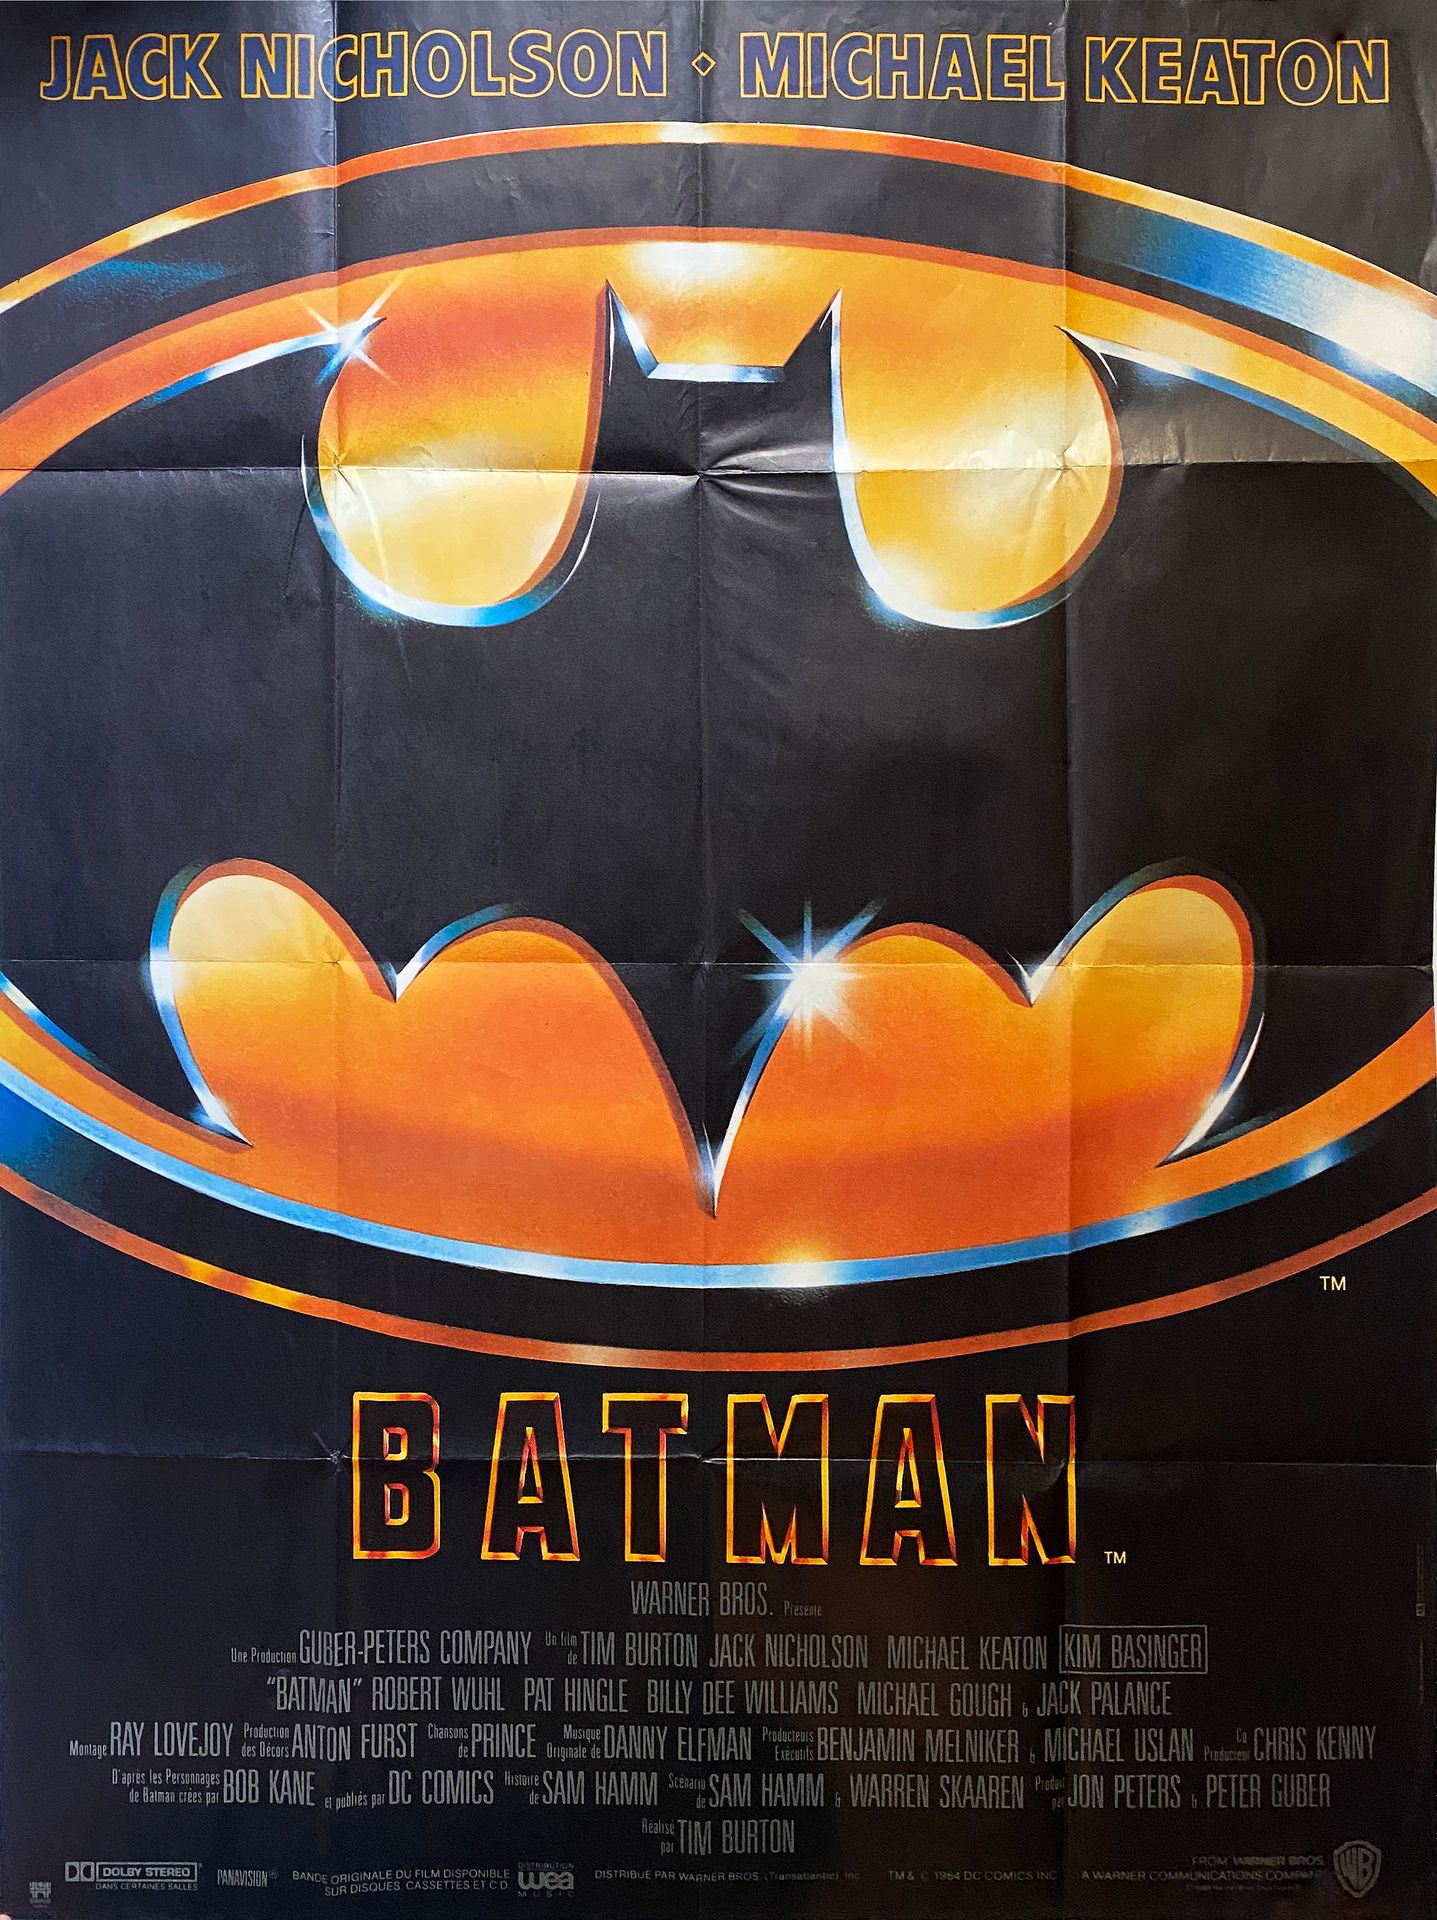 Null 
[电影] - 蝙蝠侠 - 蒂姆-波顿与迈克尔-基顿和杰克-尼克尔森合作的《蝙蝠侠历险记》第一部分的海报（1989年）。
状况非常好（已折叠）。 

&hellip;